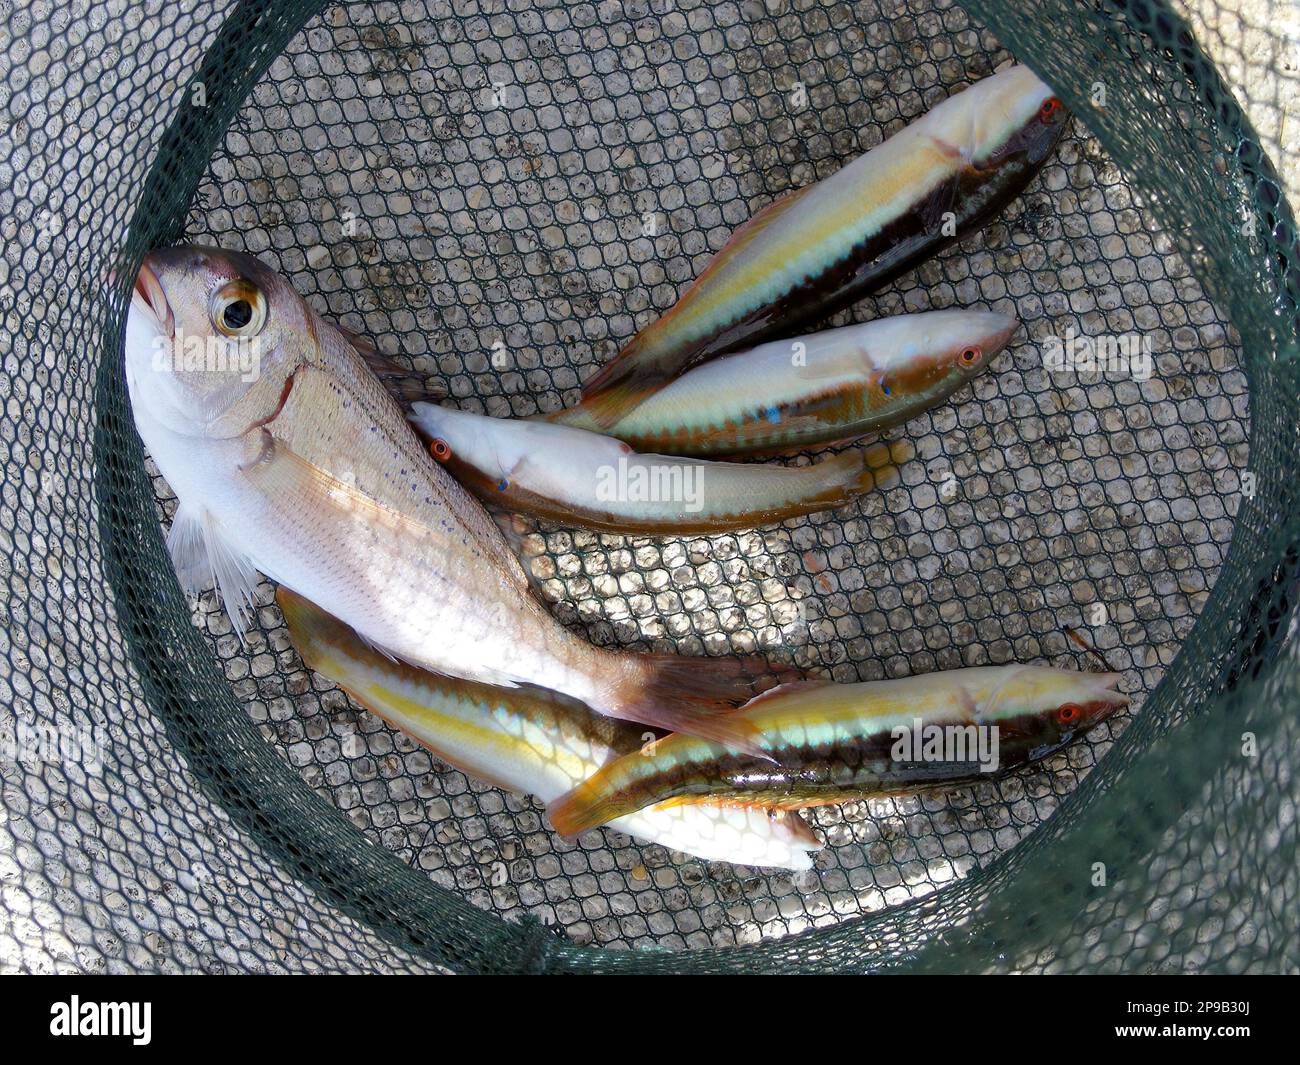 The common pandora (Pagellus erythrinus and Mediterranean rainbow wrasse (Coris julis). Fish caught off the coast of Croatia in a fish net. Stock Photo